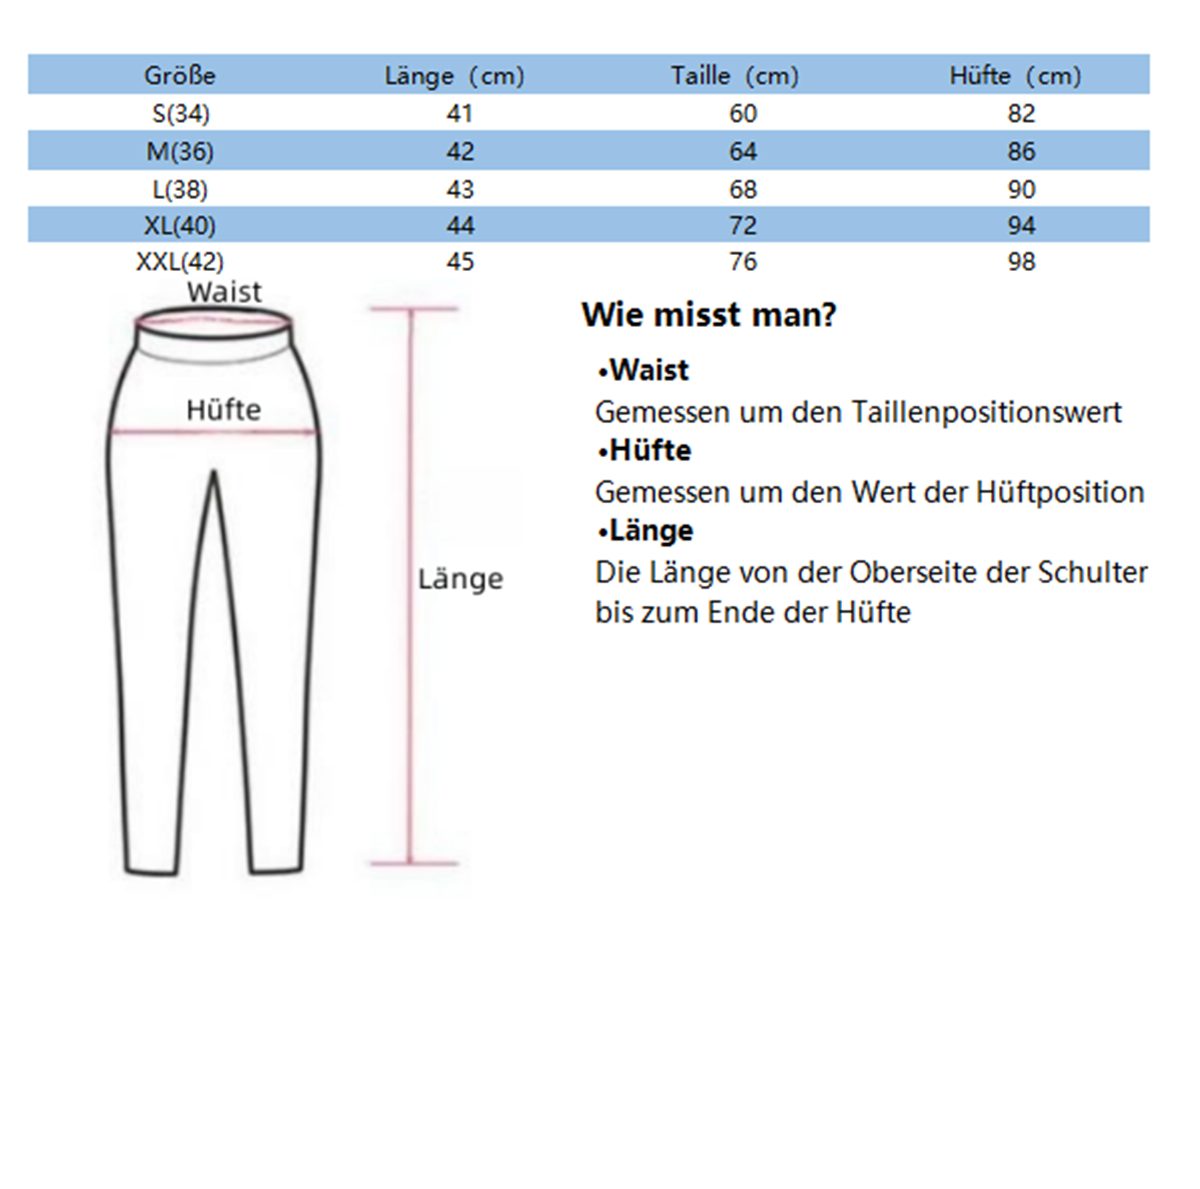 carefully grau selected Damen-Shorts Yogashorts schnell Taille, hoher Stretch, trocknend mit Netztasche,